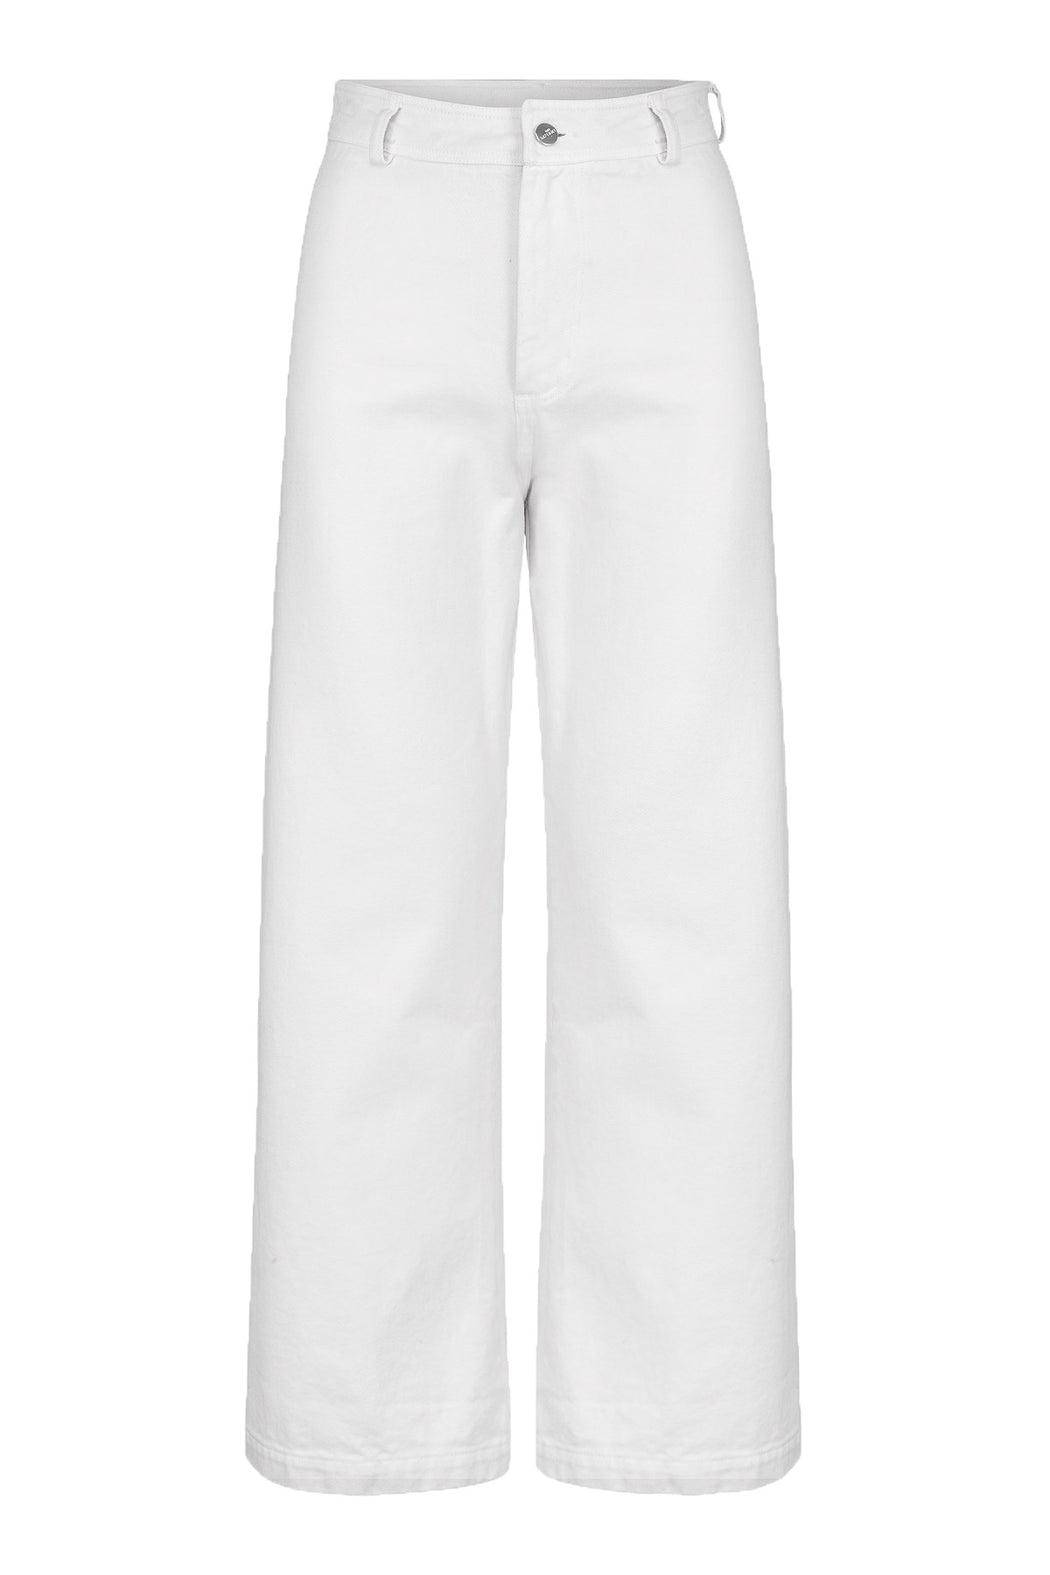 Envelope1976 Flare pant - Organic cotton Pants White